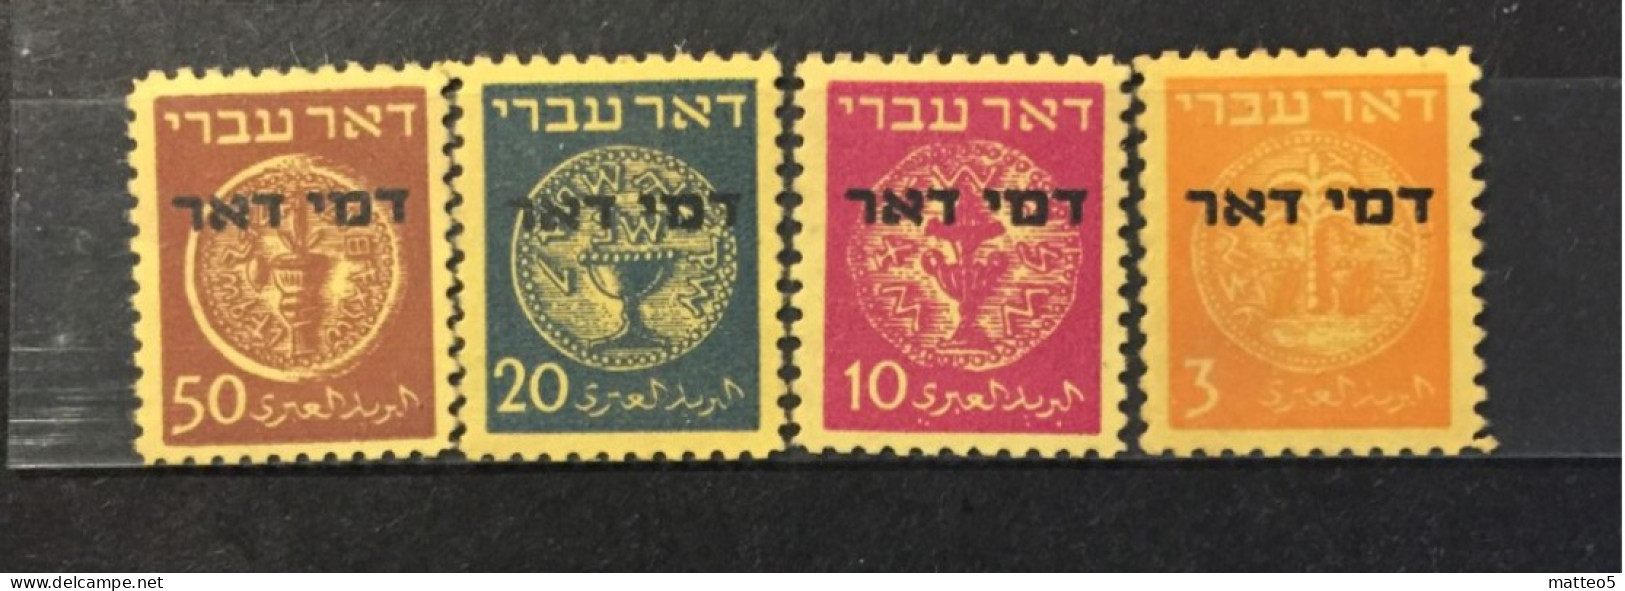 1948 - Israel - Coins Doar Ivri - Postage Due . No Tab - 4 Stamps Unused - Ungebraucht (ohne Tabs)